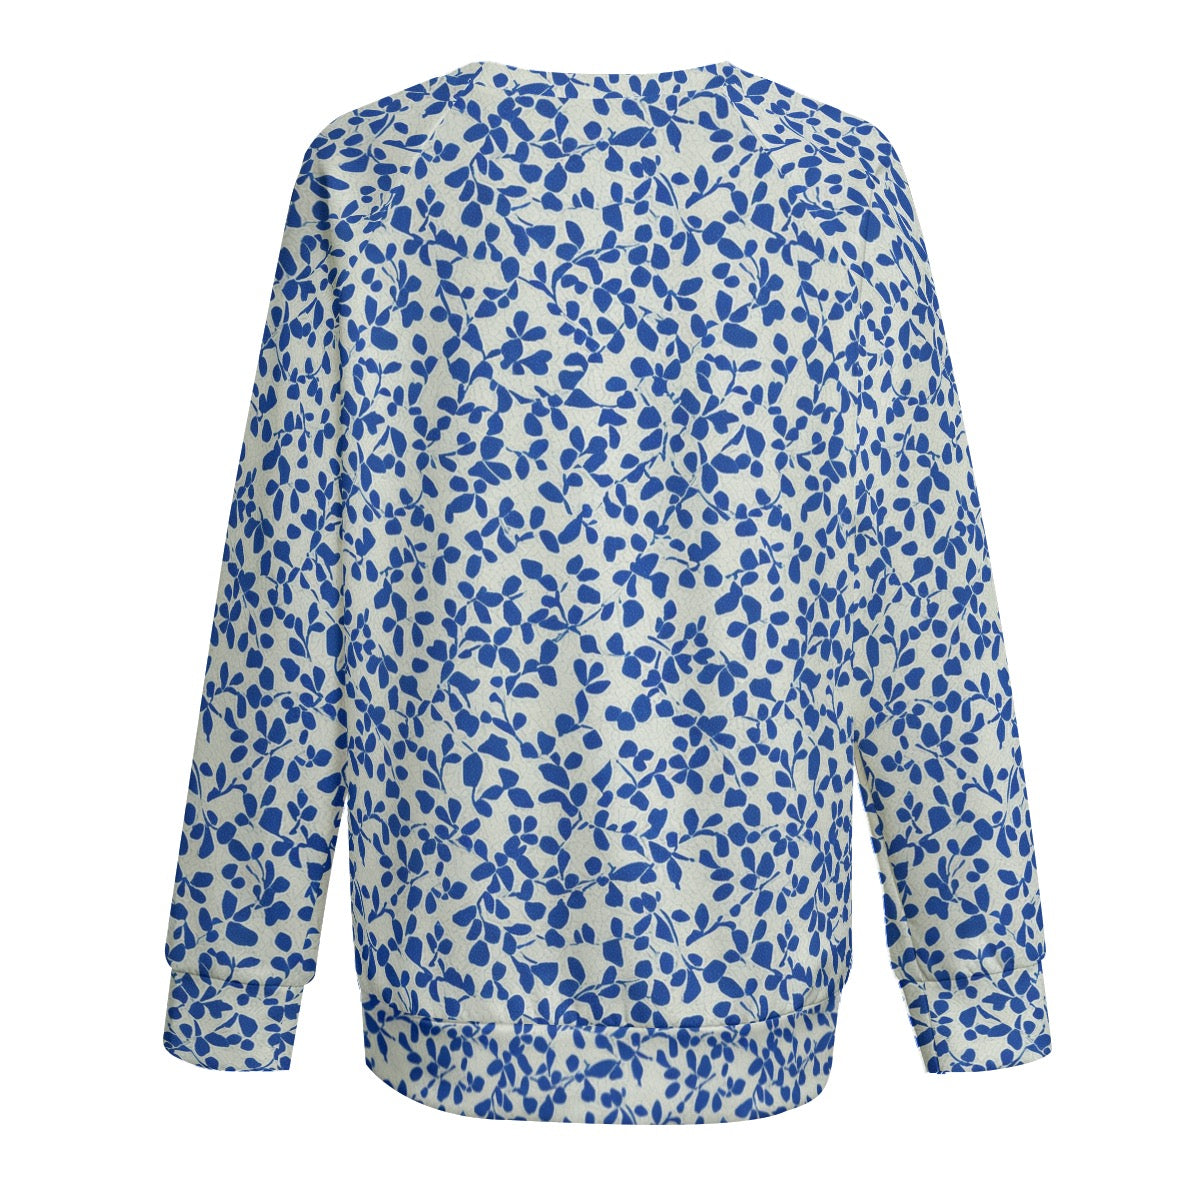 Blue & White -- Women's Sweatshirt With Raglan Sleeve | Interlock